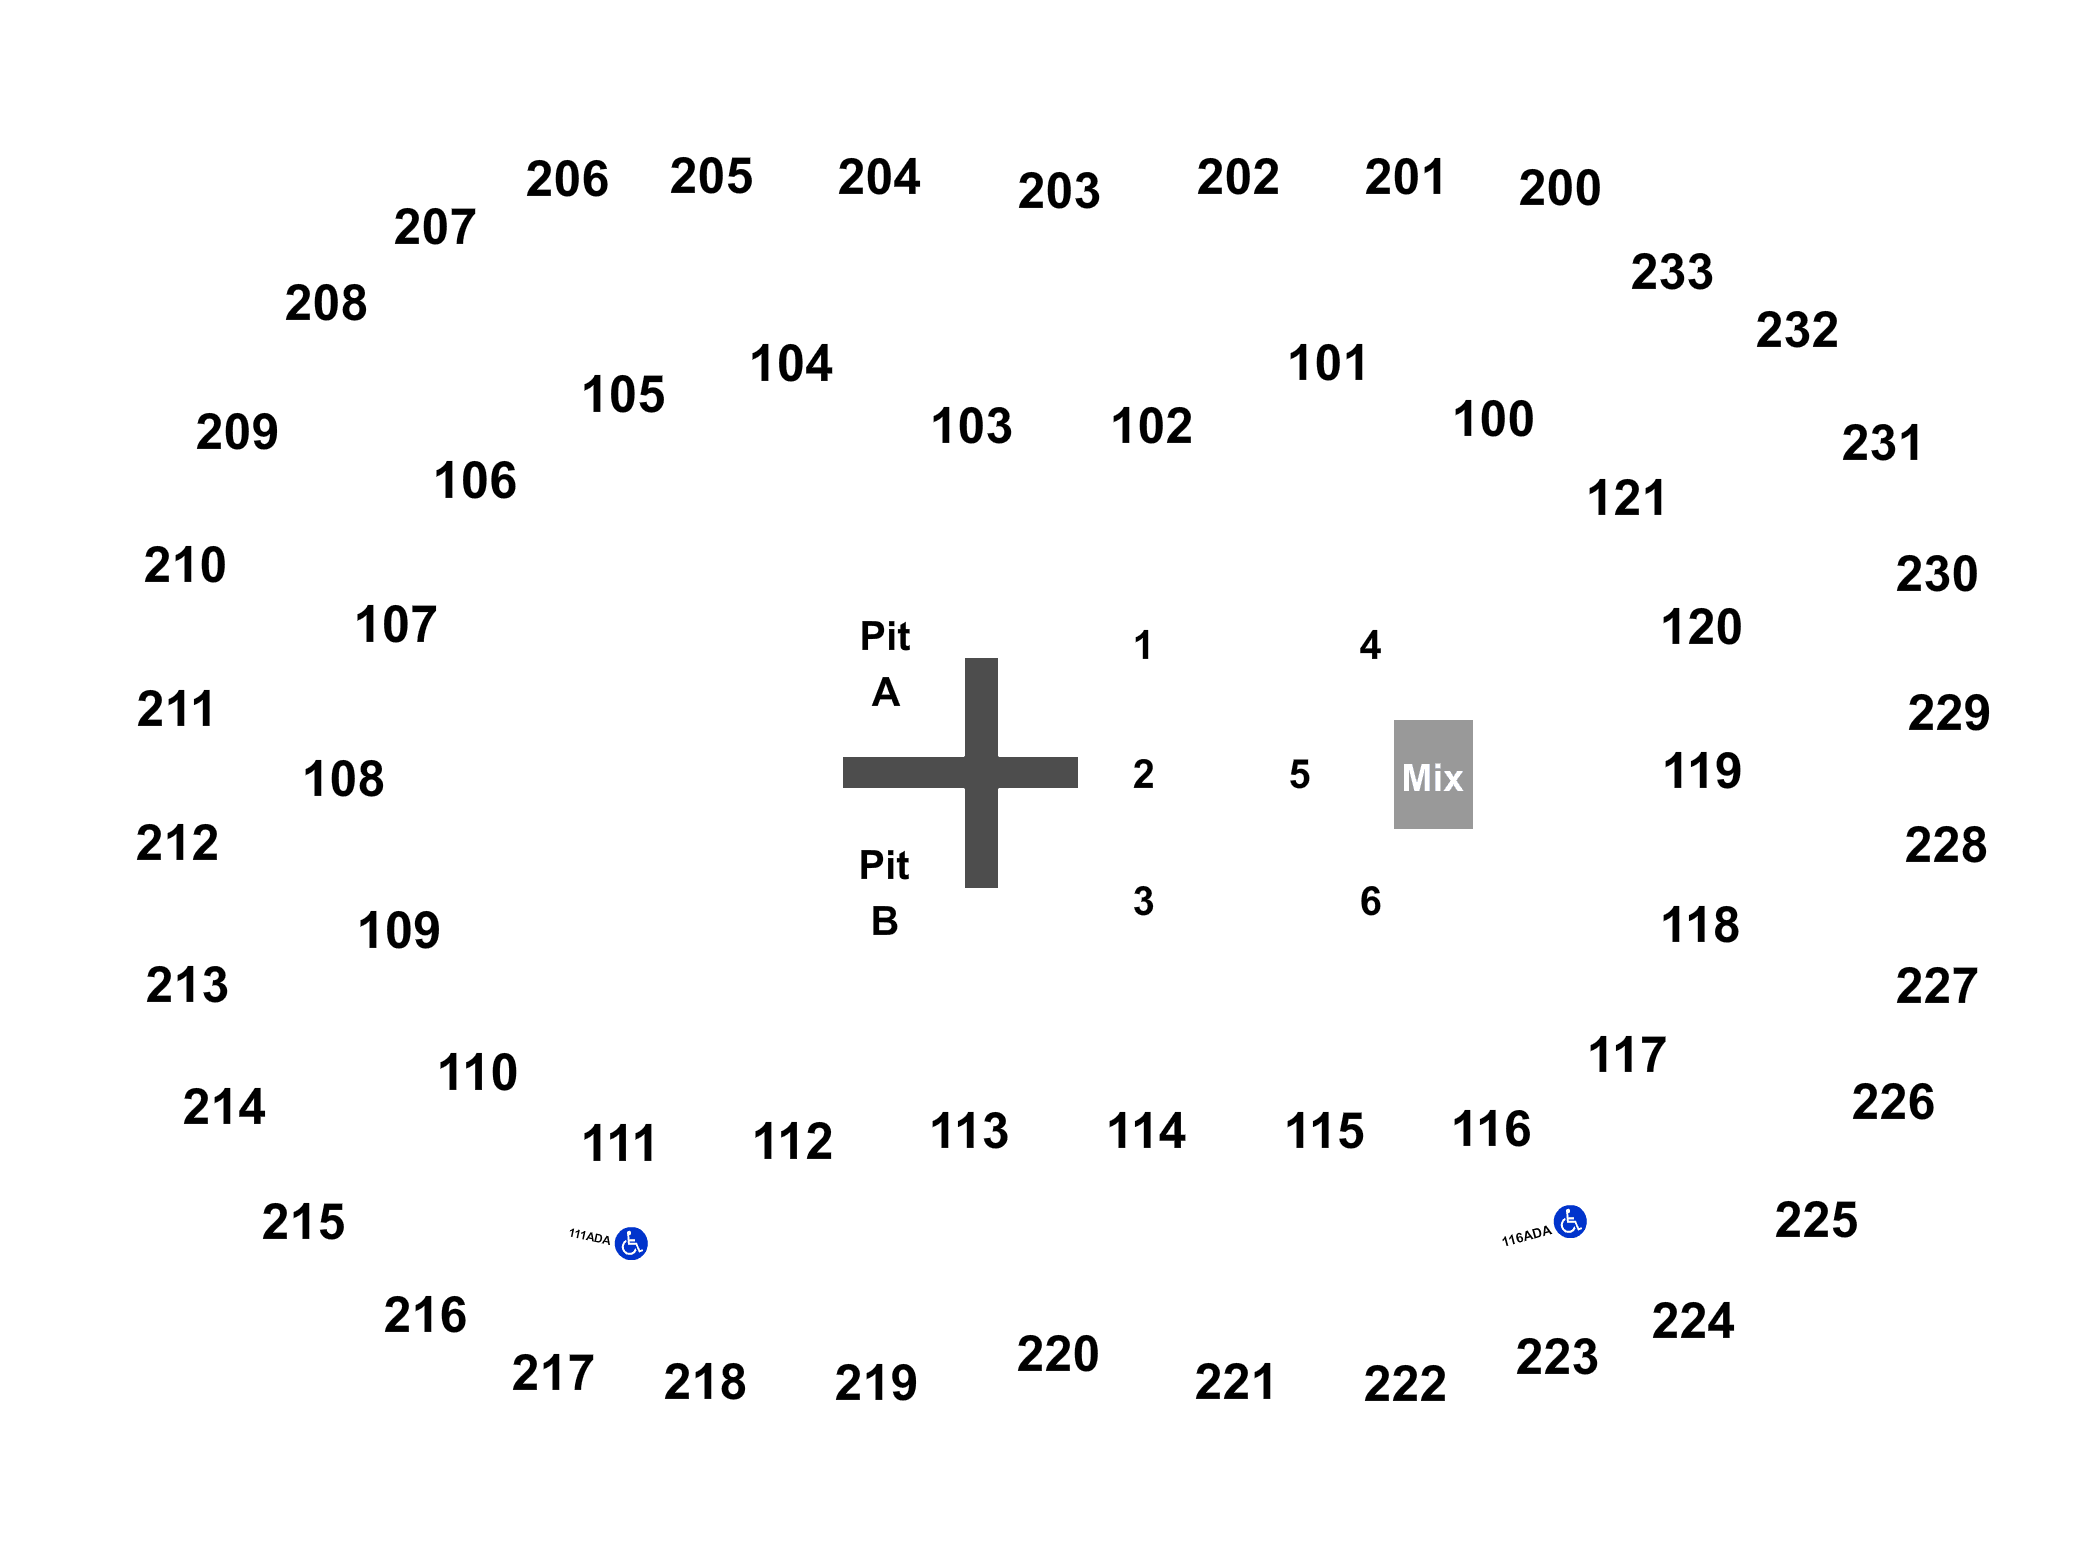 bon secours wellness arena seating chart